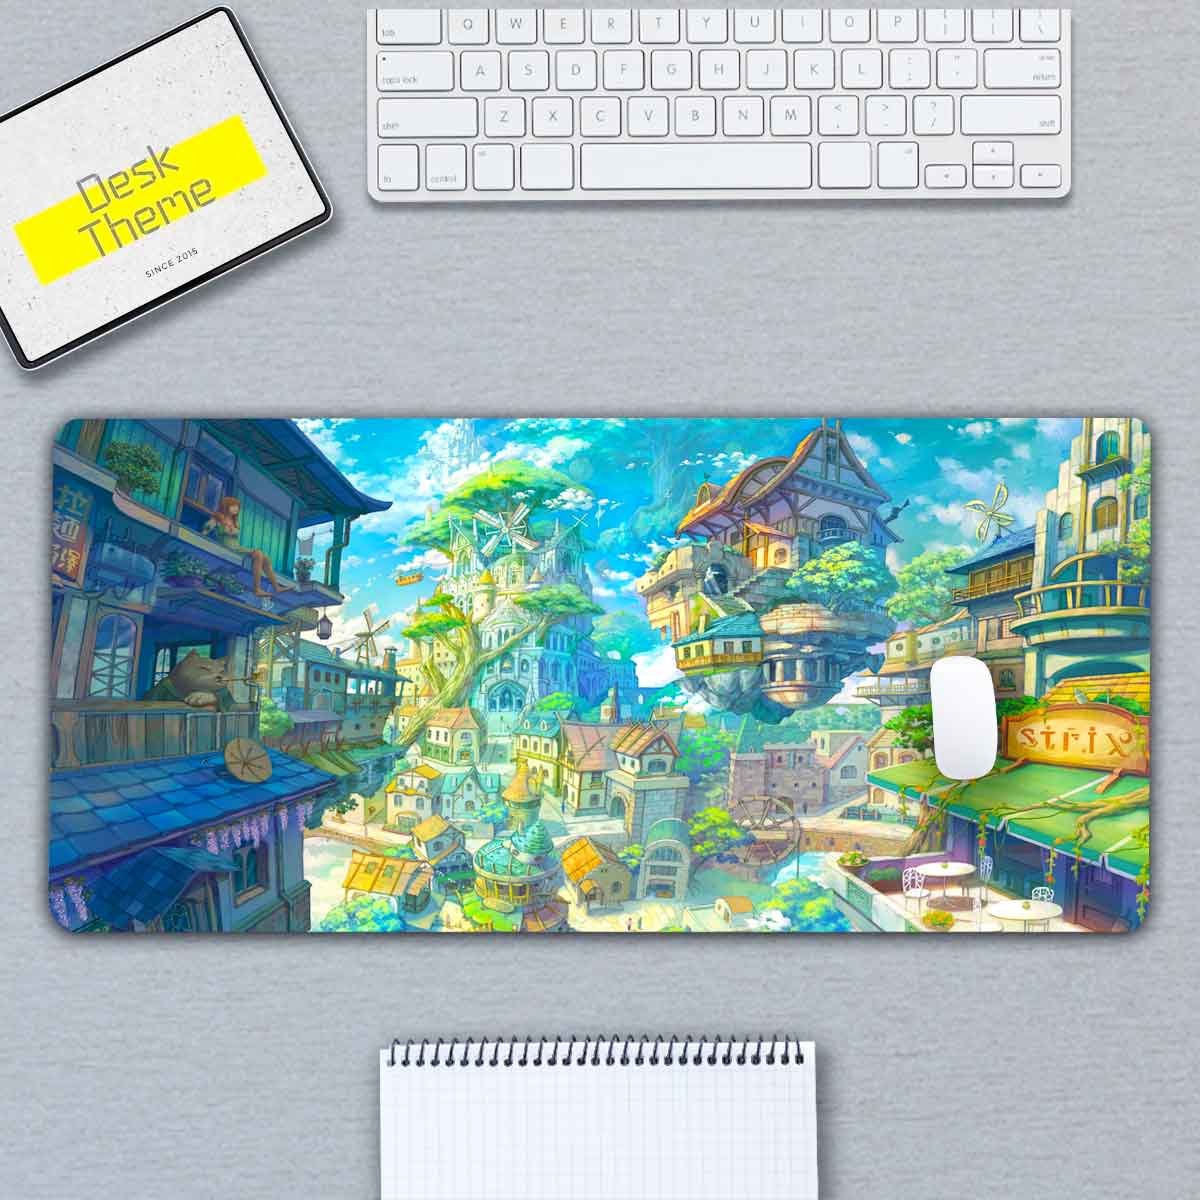 Anime Fantacy View Desk Pad